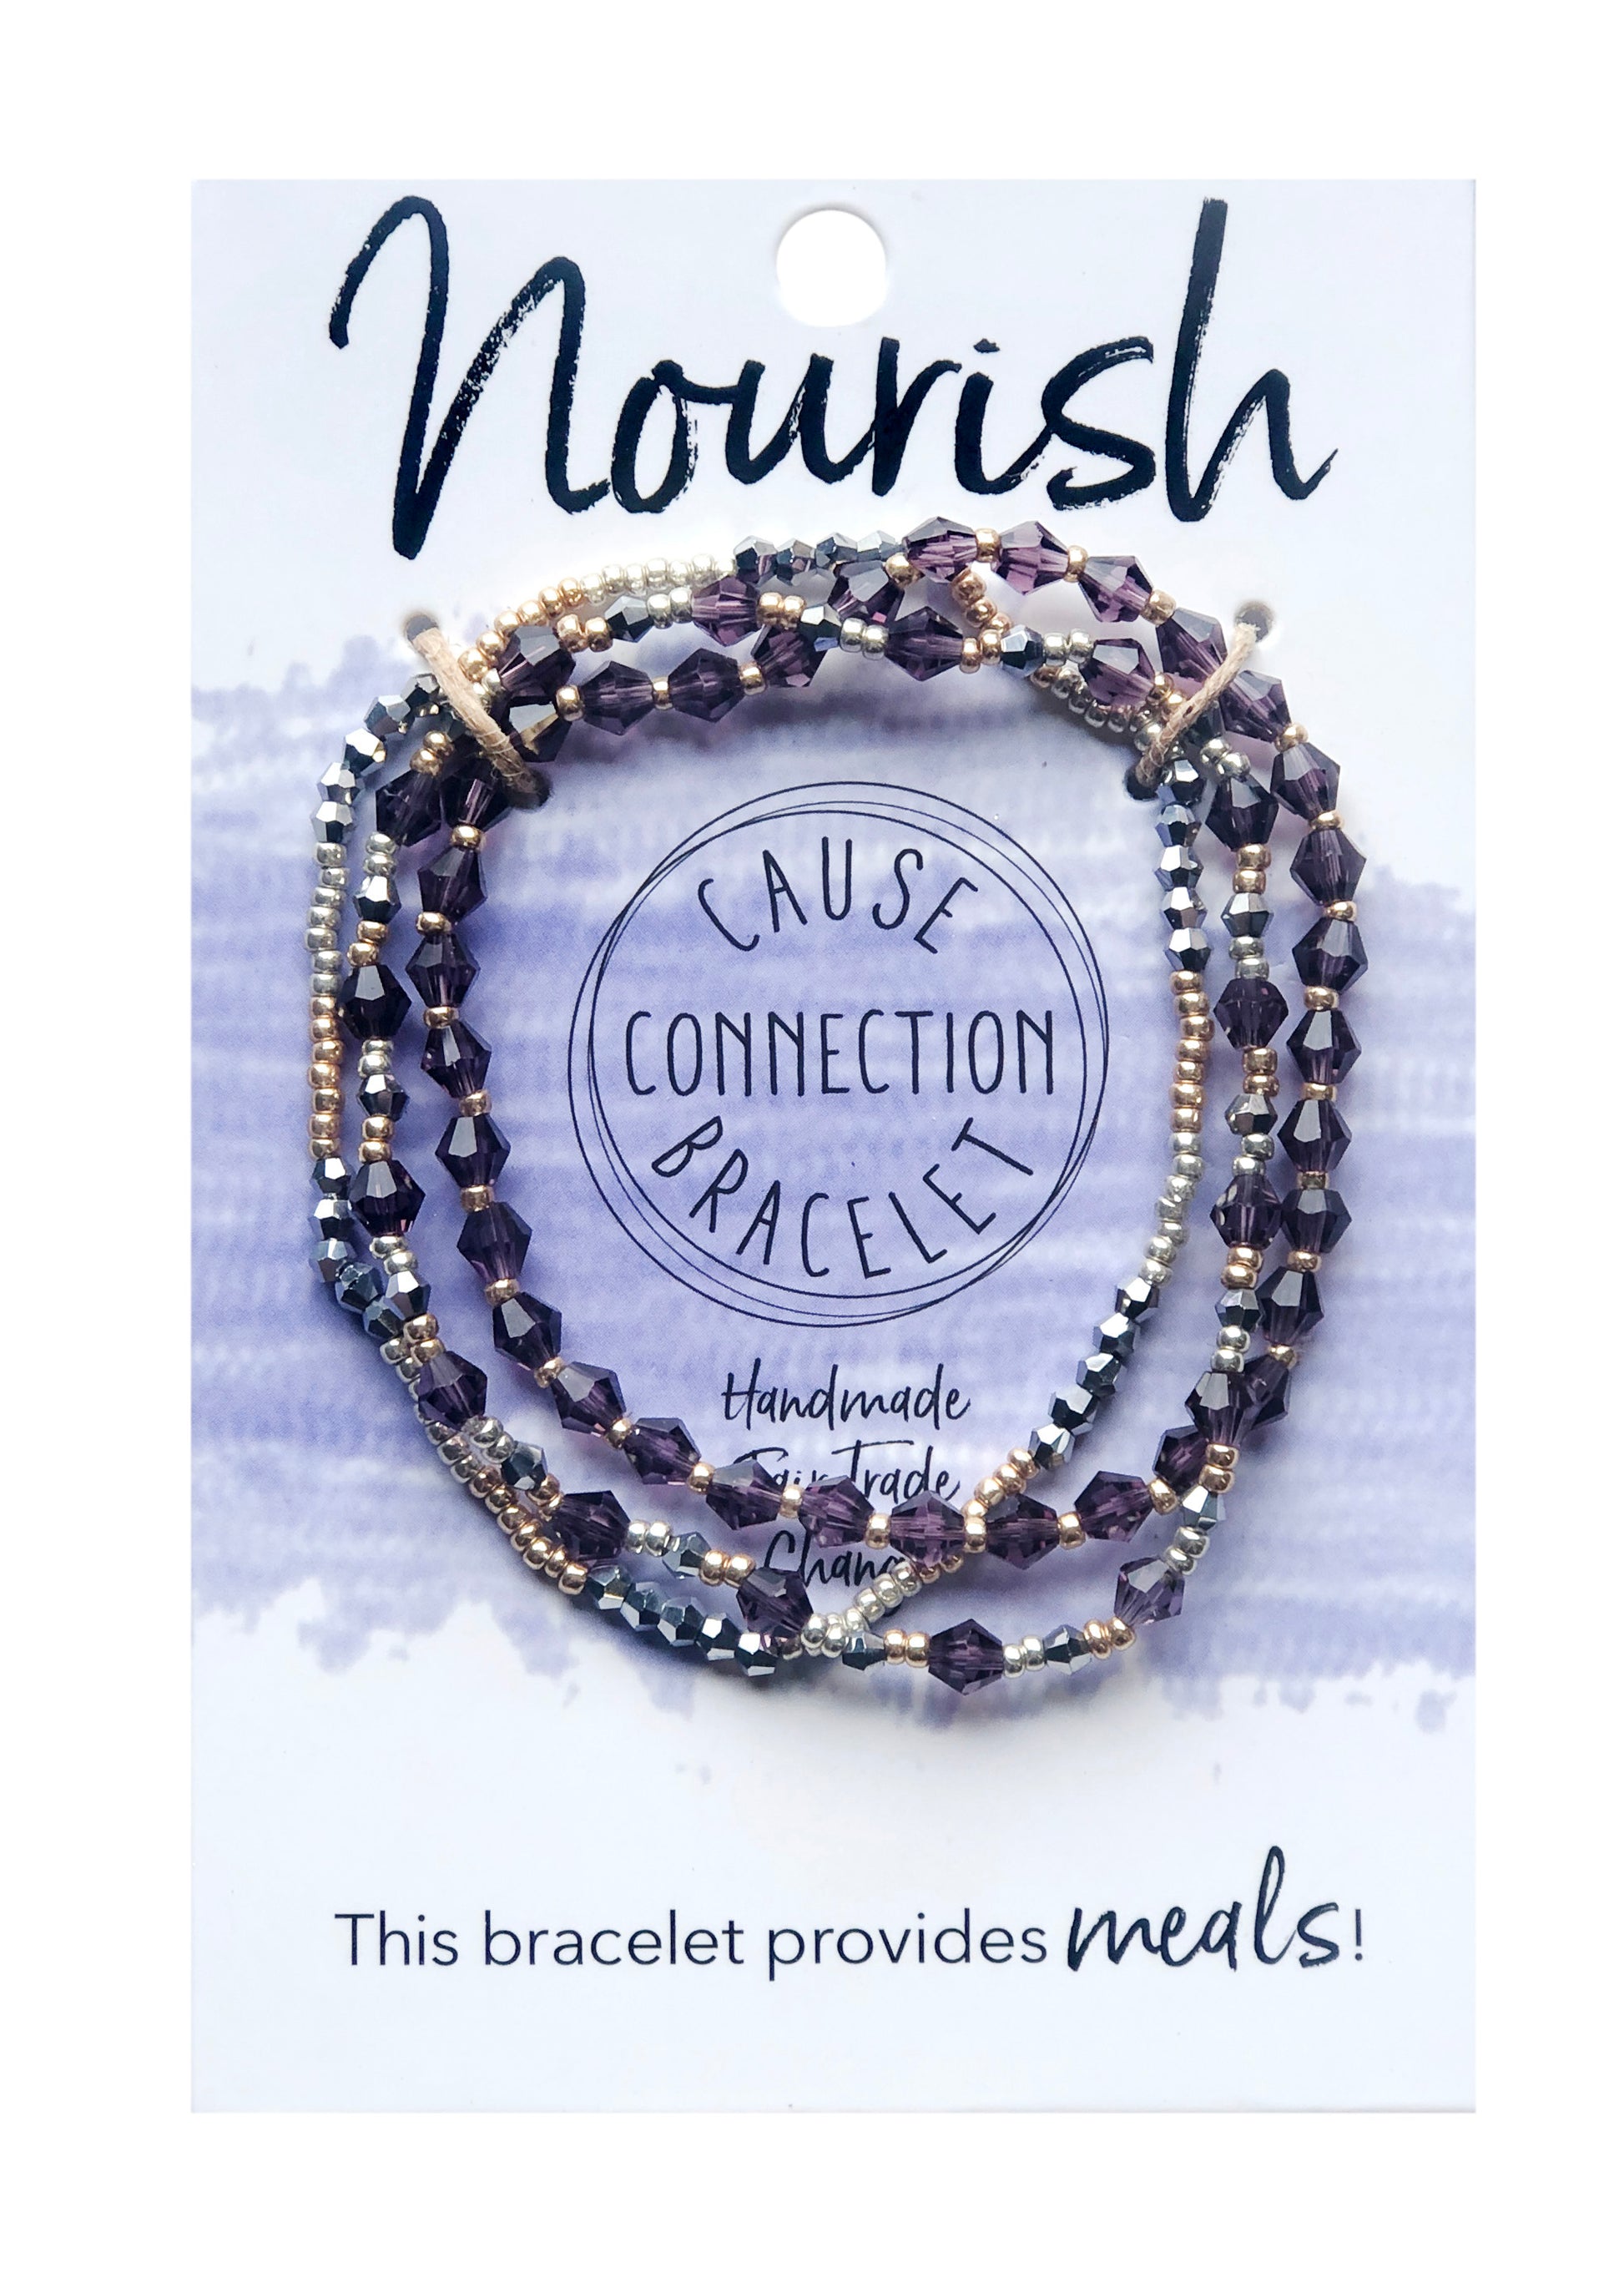 Nourish cause bracelet